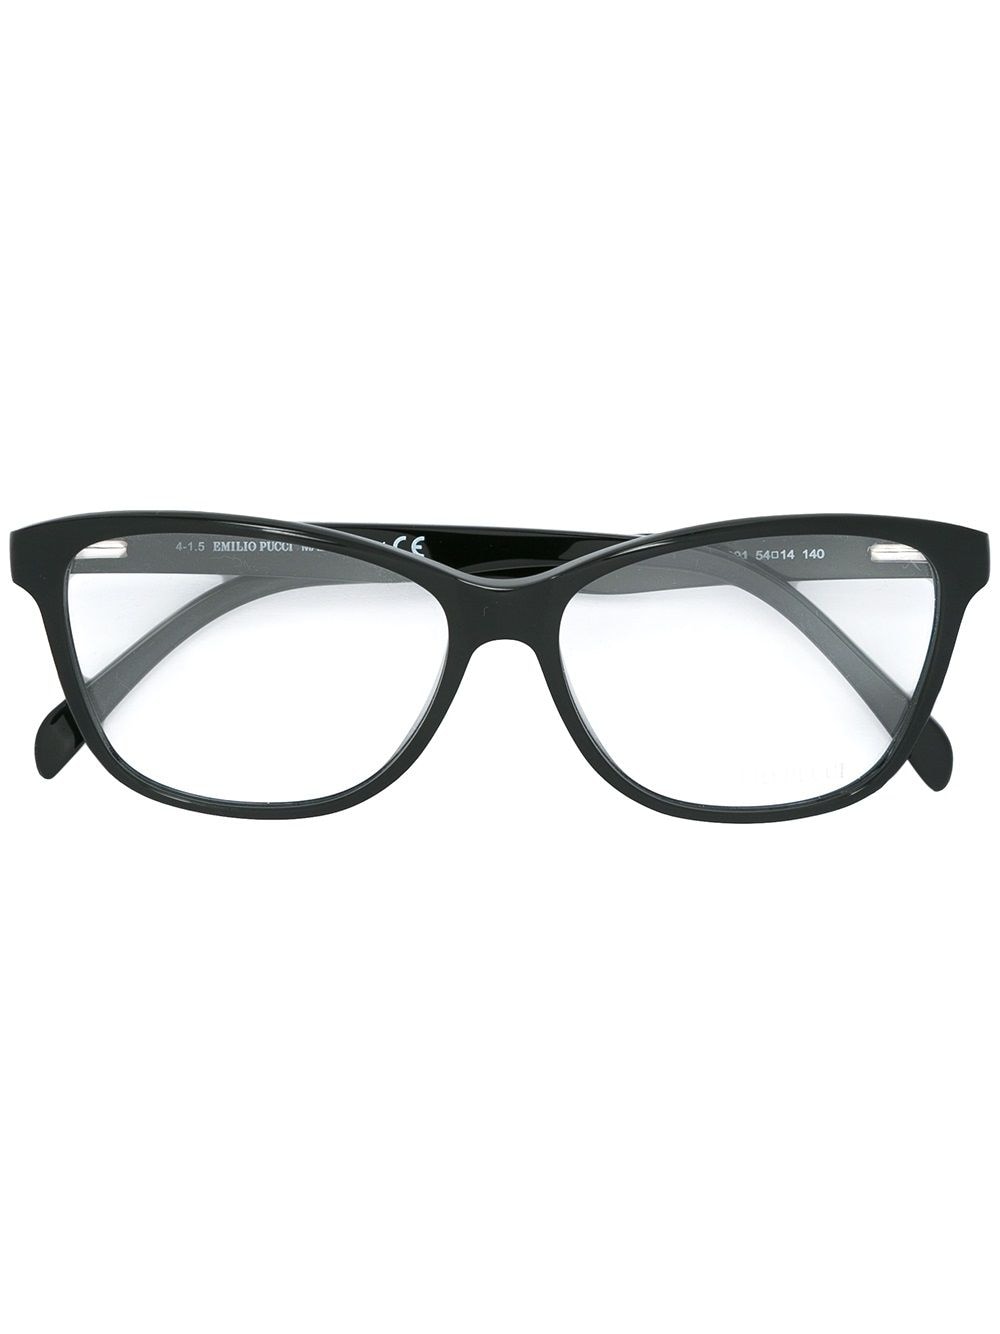 PUCCI Optical Glasses - Farfetch